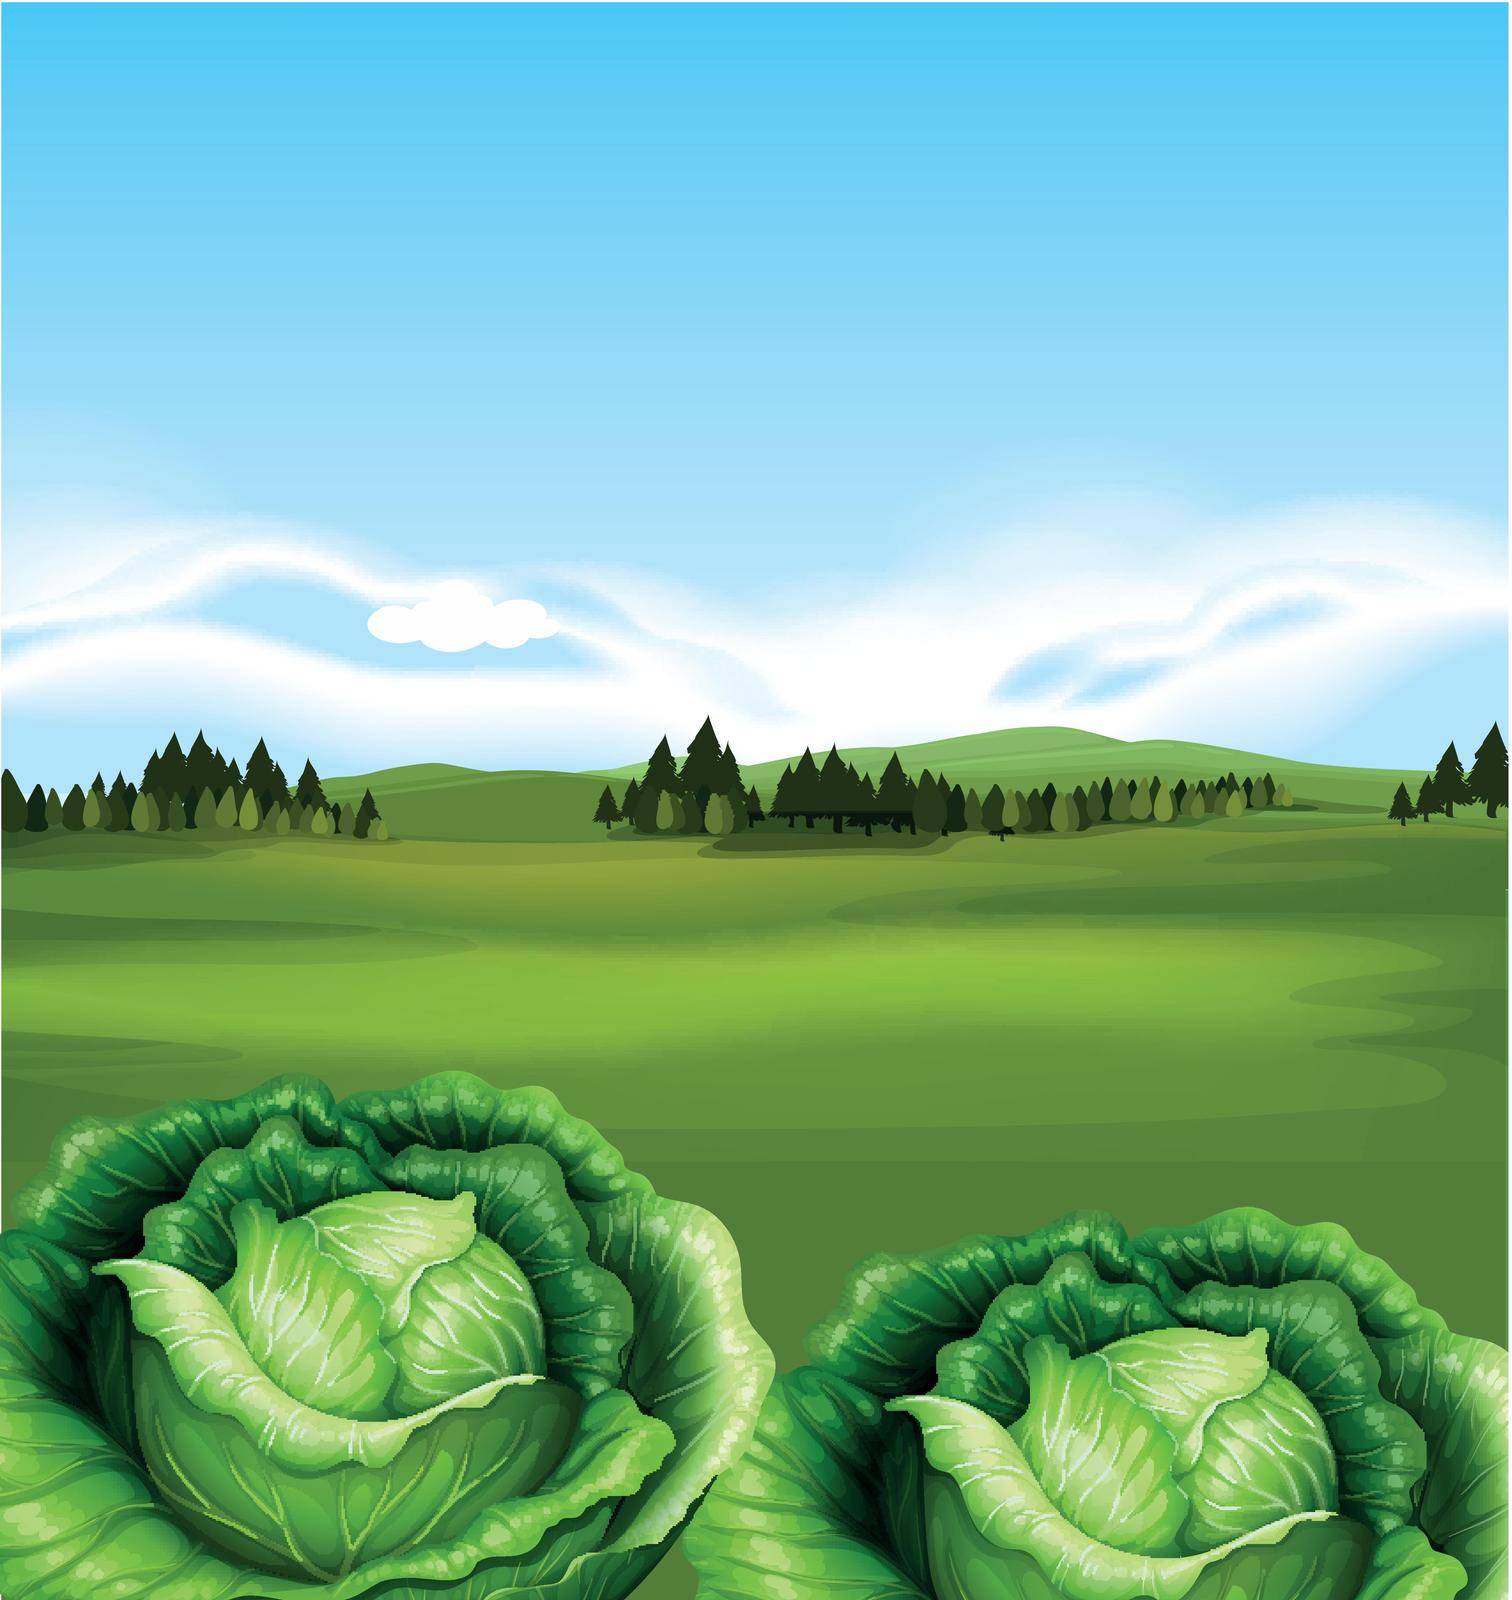 Organic Cabbage with Beautiful Scenery illustration